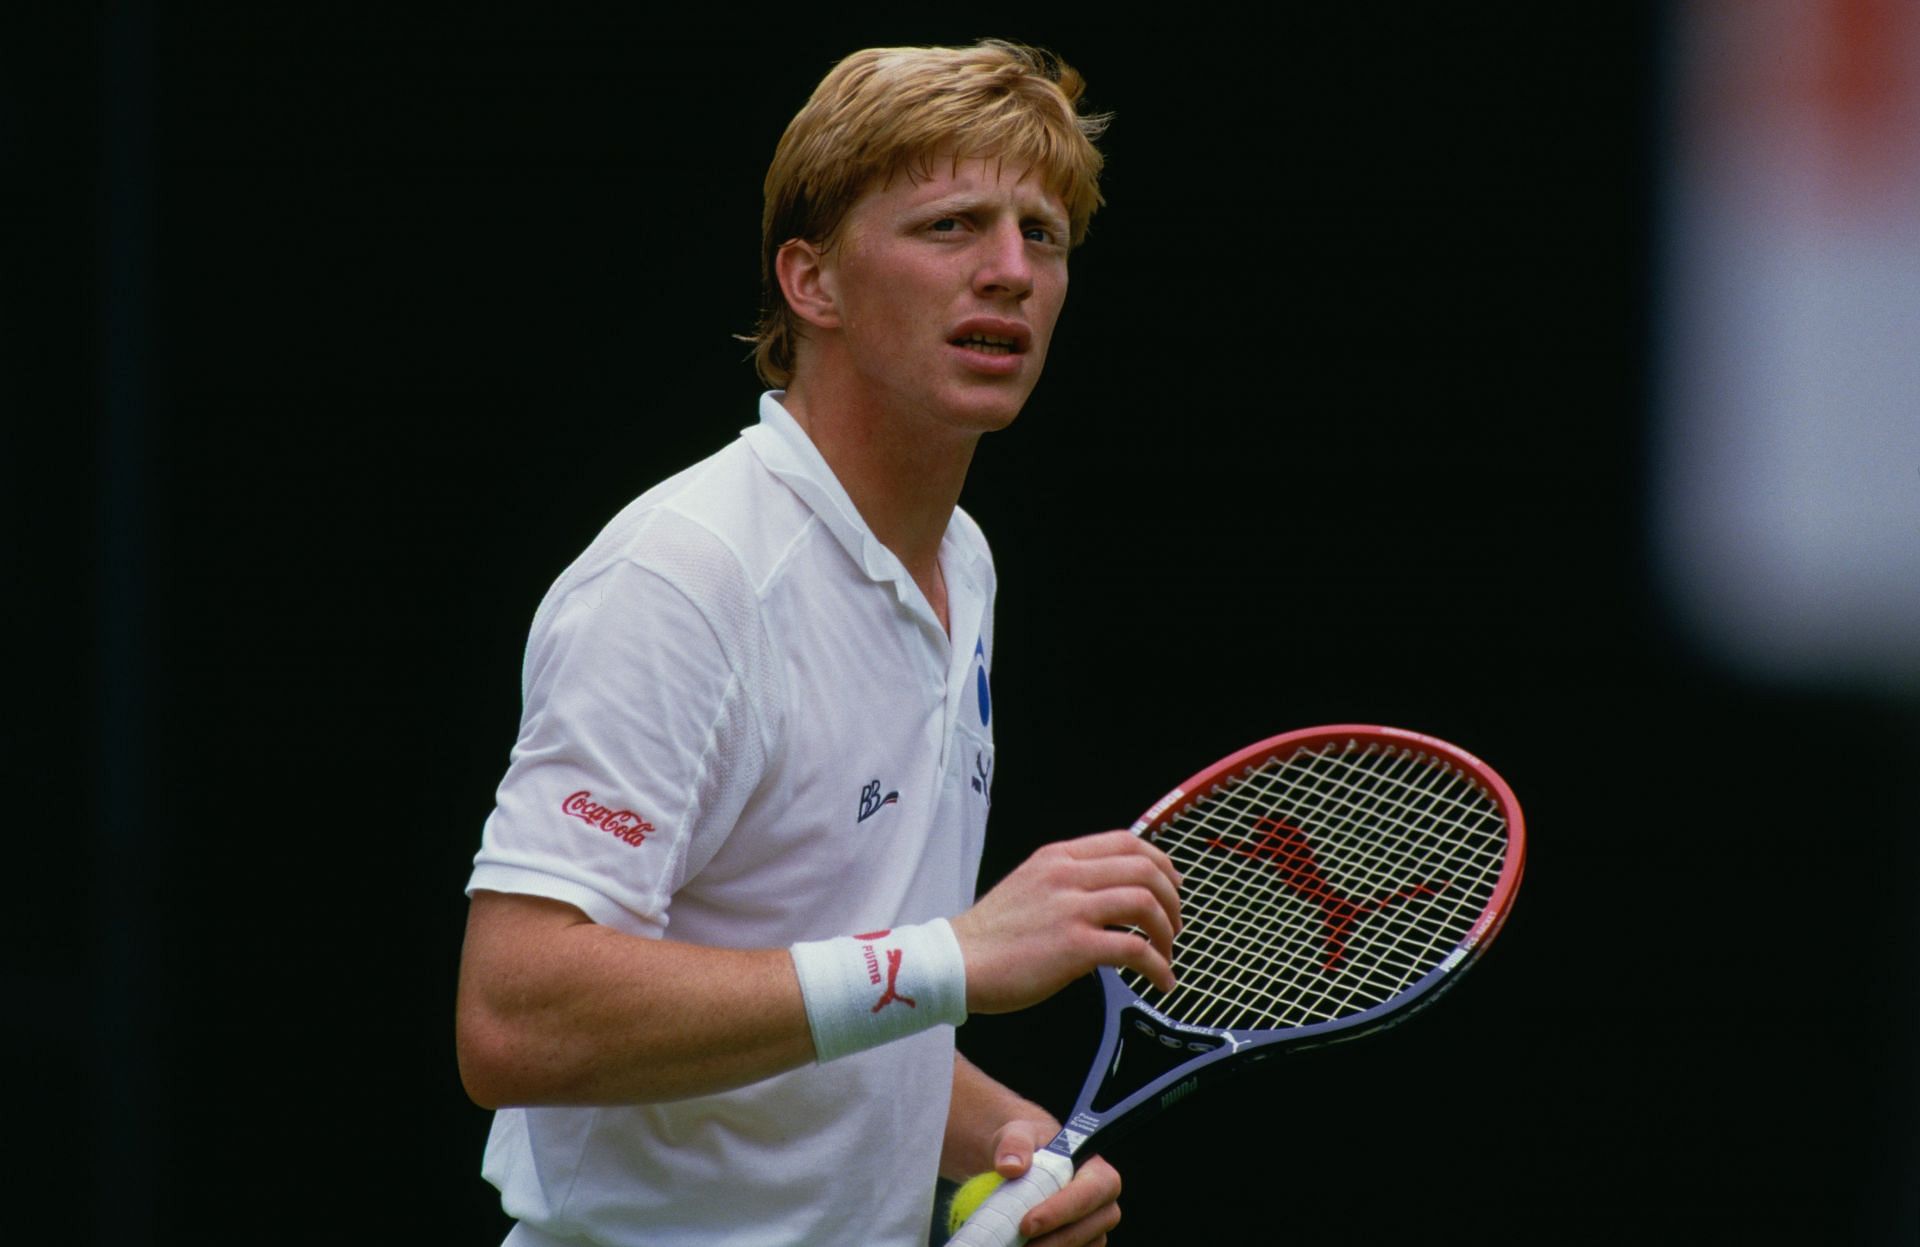 Boris Becker at the 1987 Wimbledon Championships